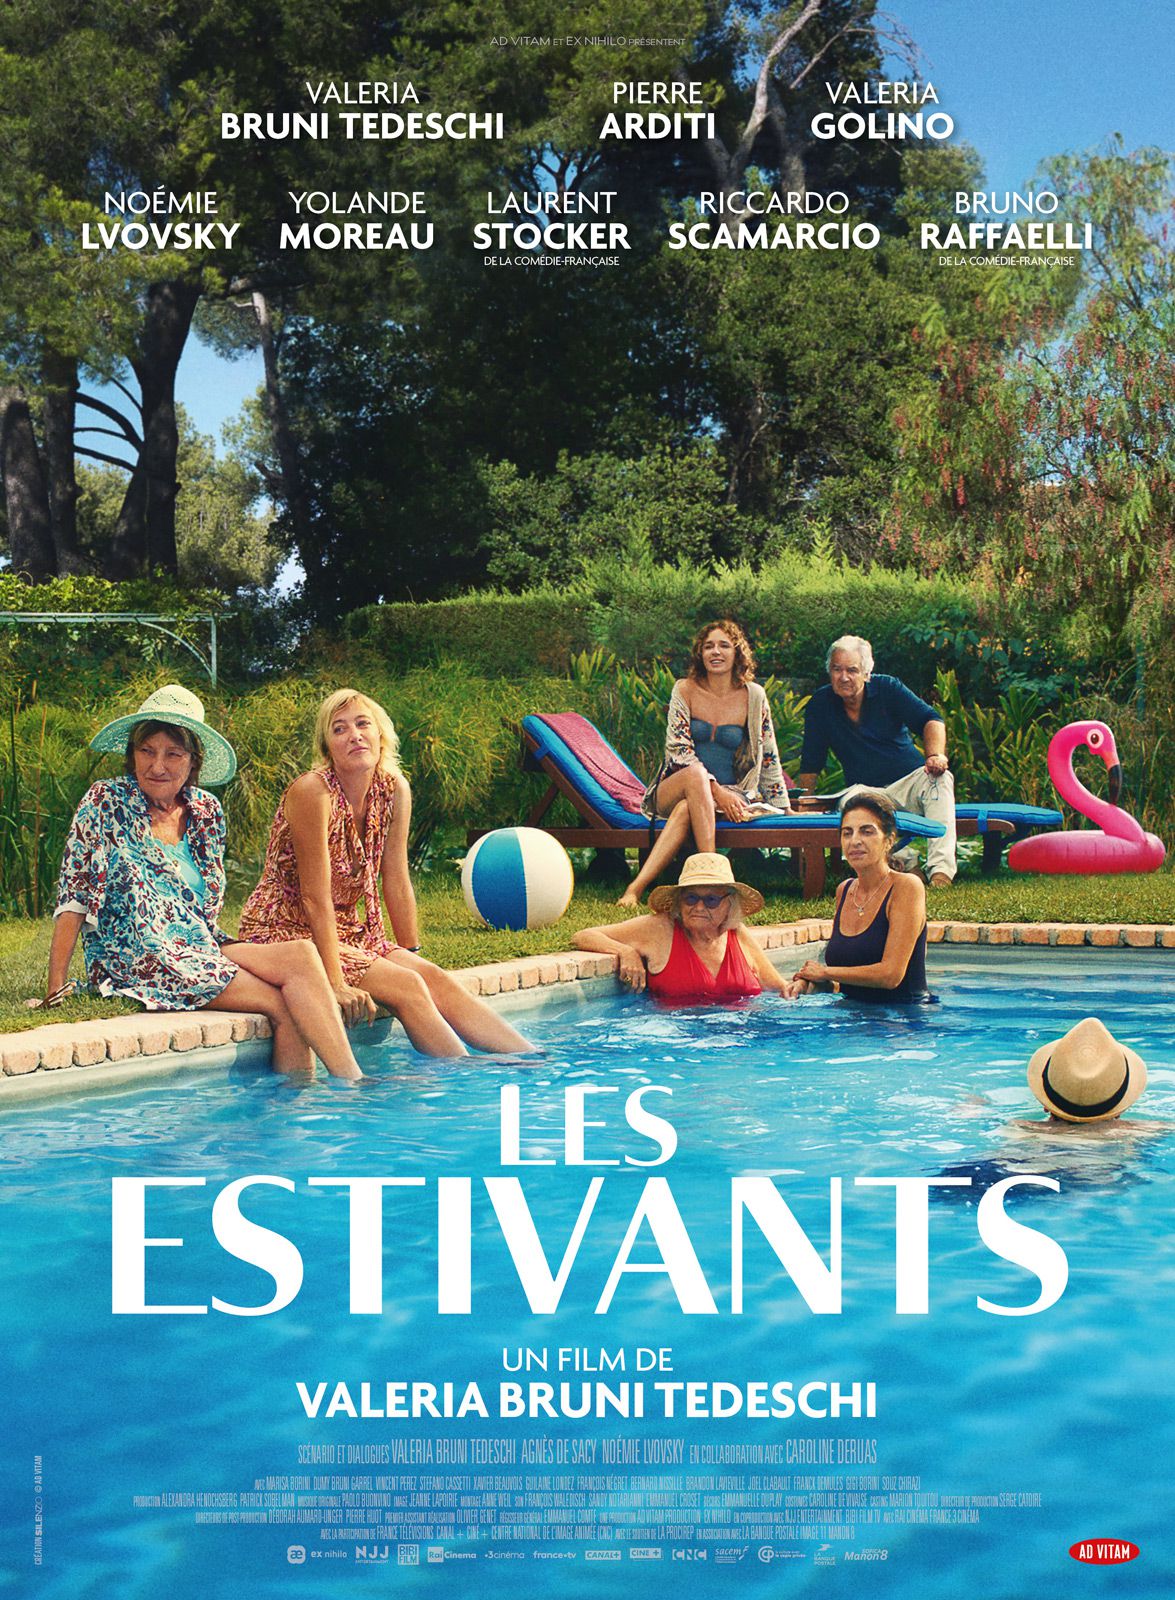 Les Estivants - Film (2019) streaming VF gratuit complet